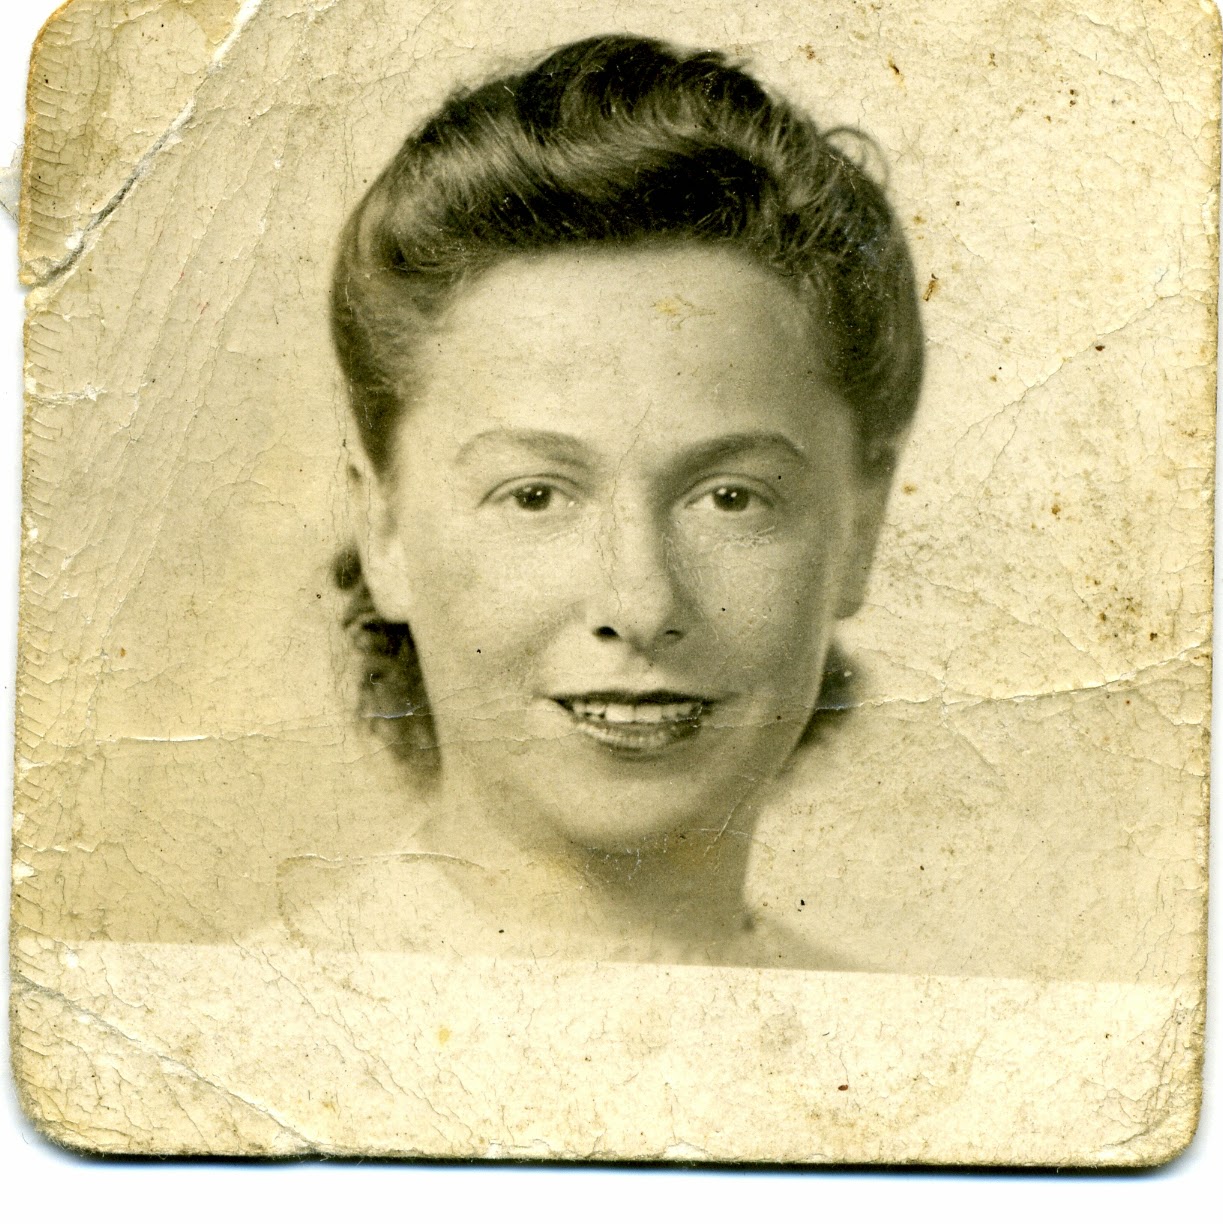 Photo Of Erika Weiser About 1950